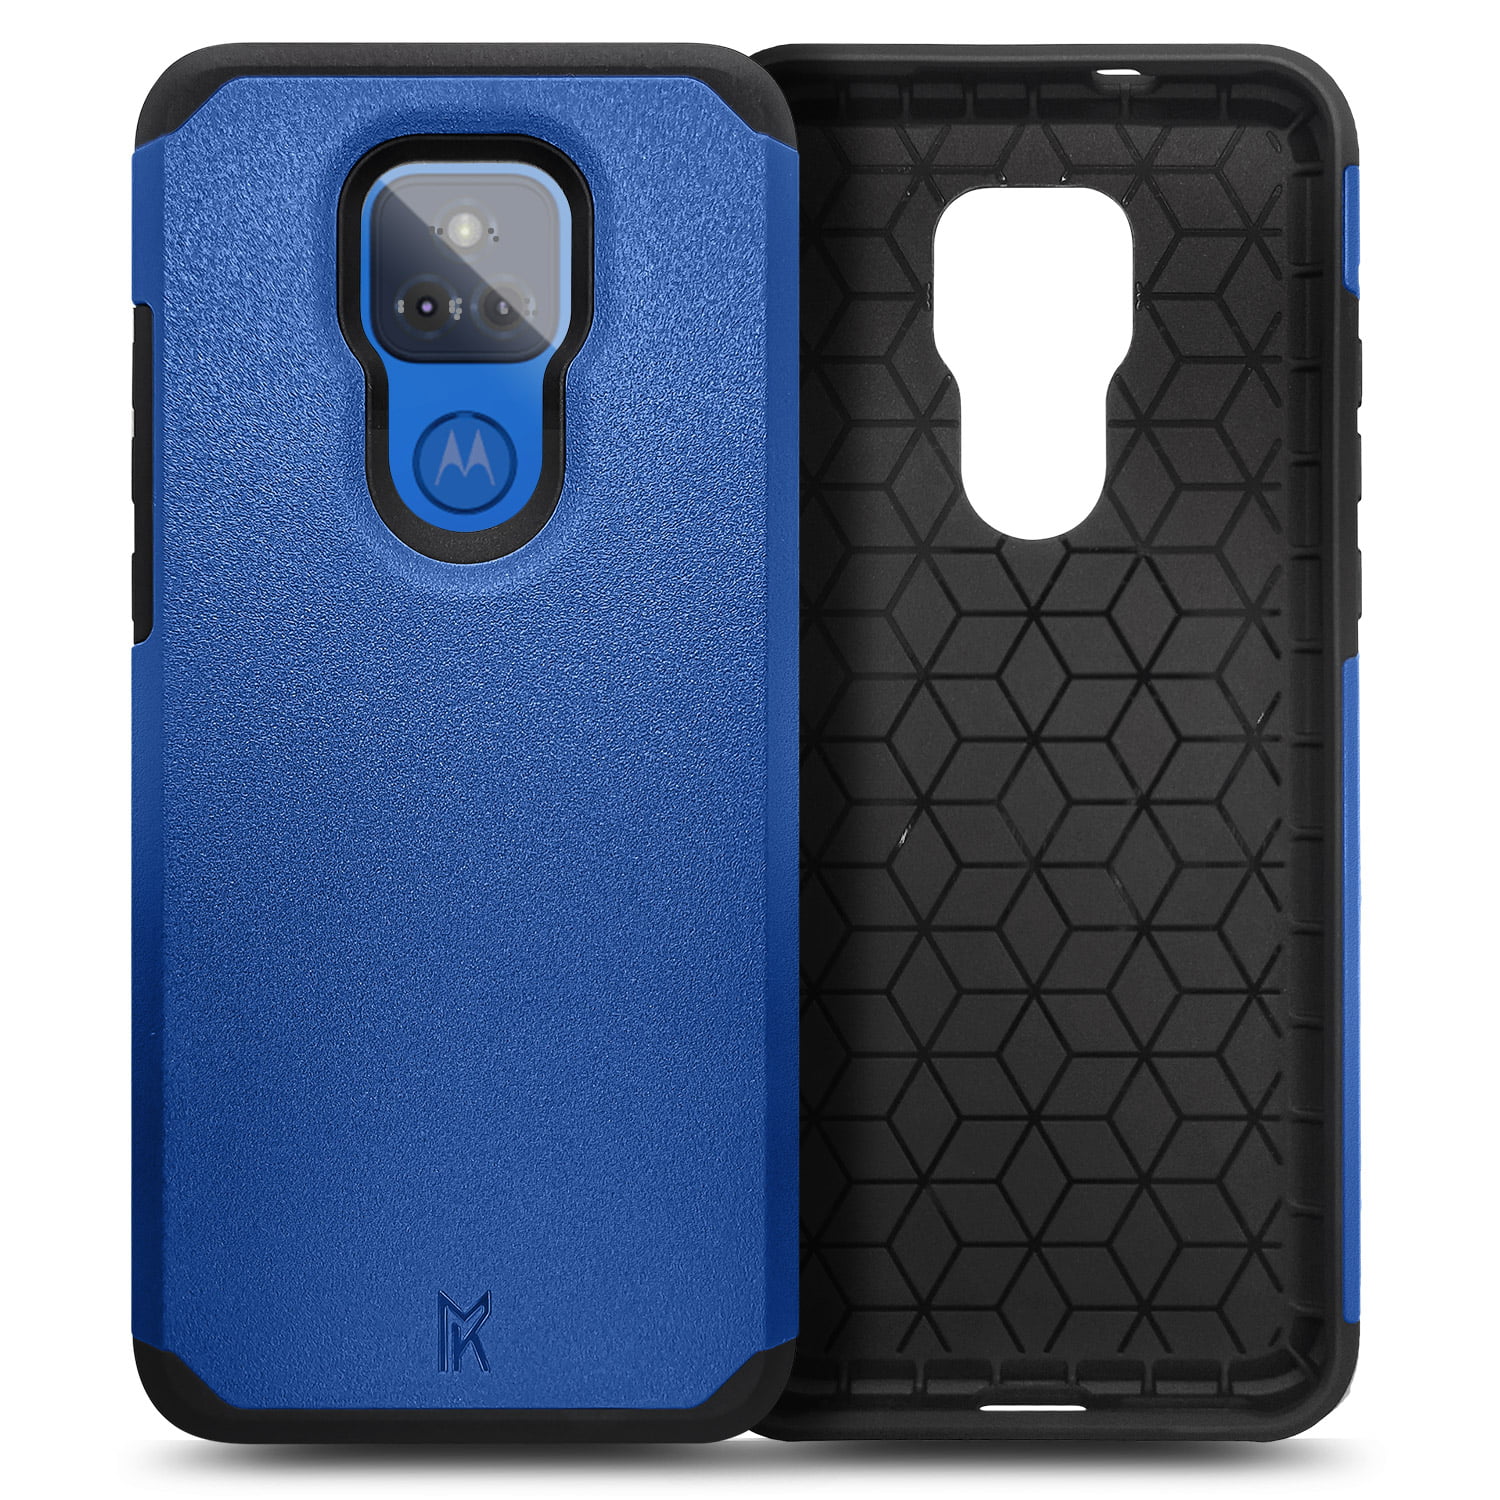 Motorola Moto G Play (2021) Case, Nagebee Premium Heavy